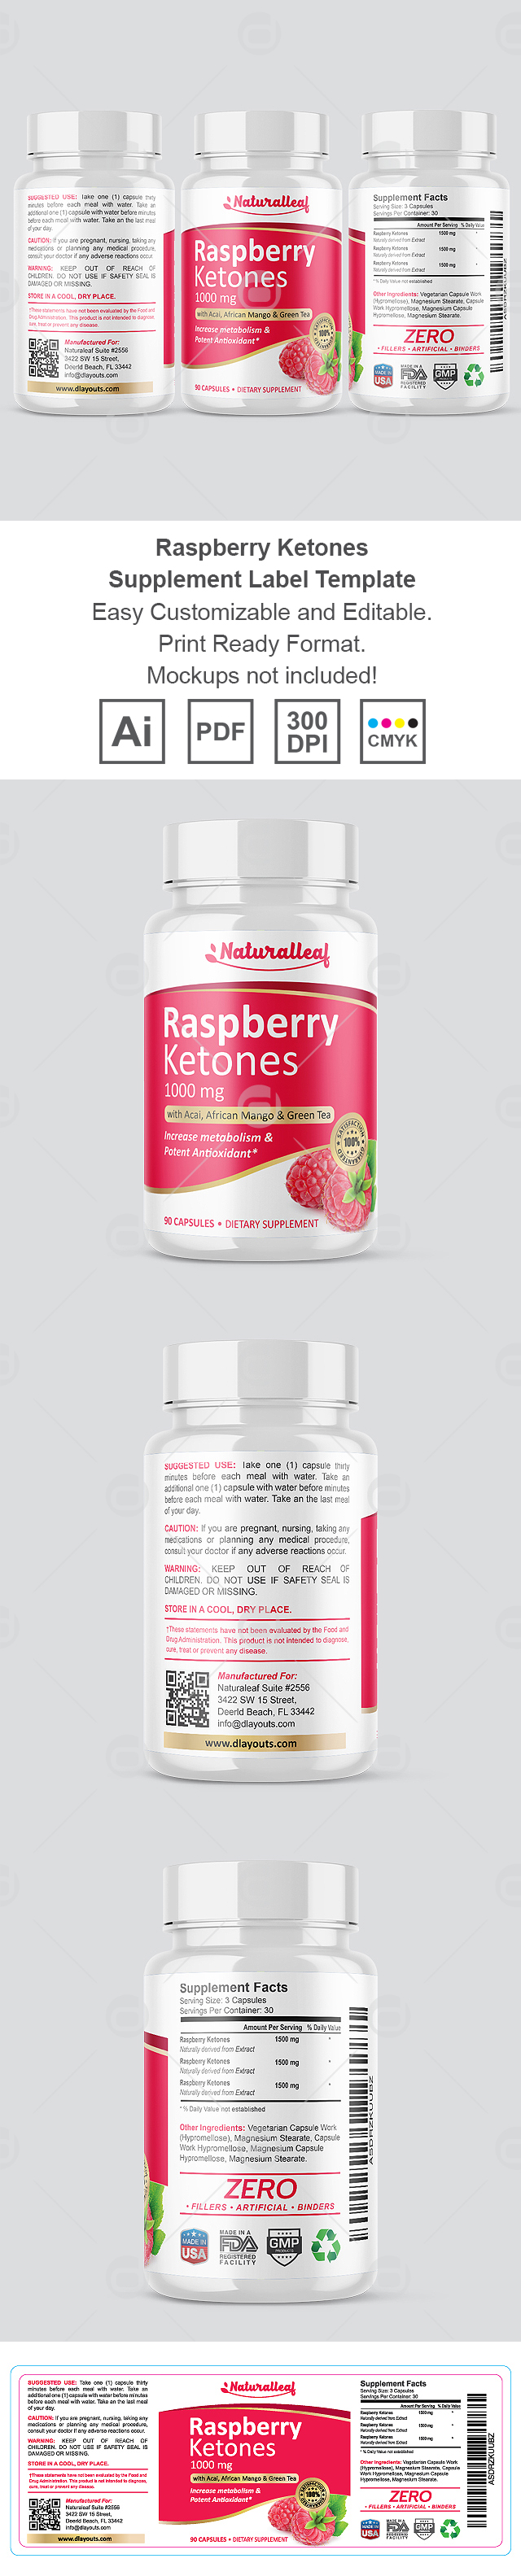 Raspberry Ketones Supplement Label Template